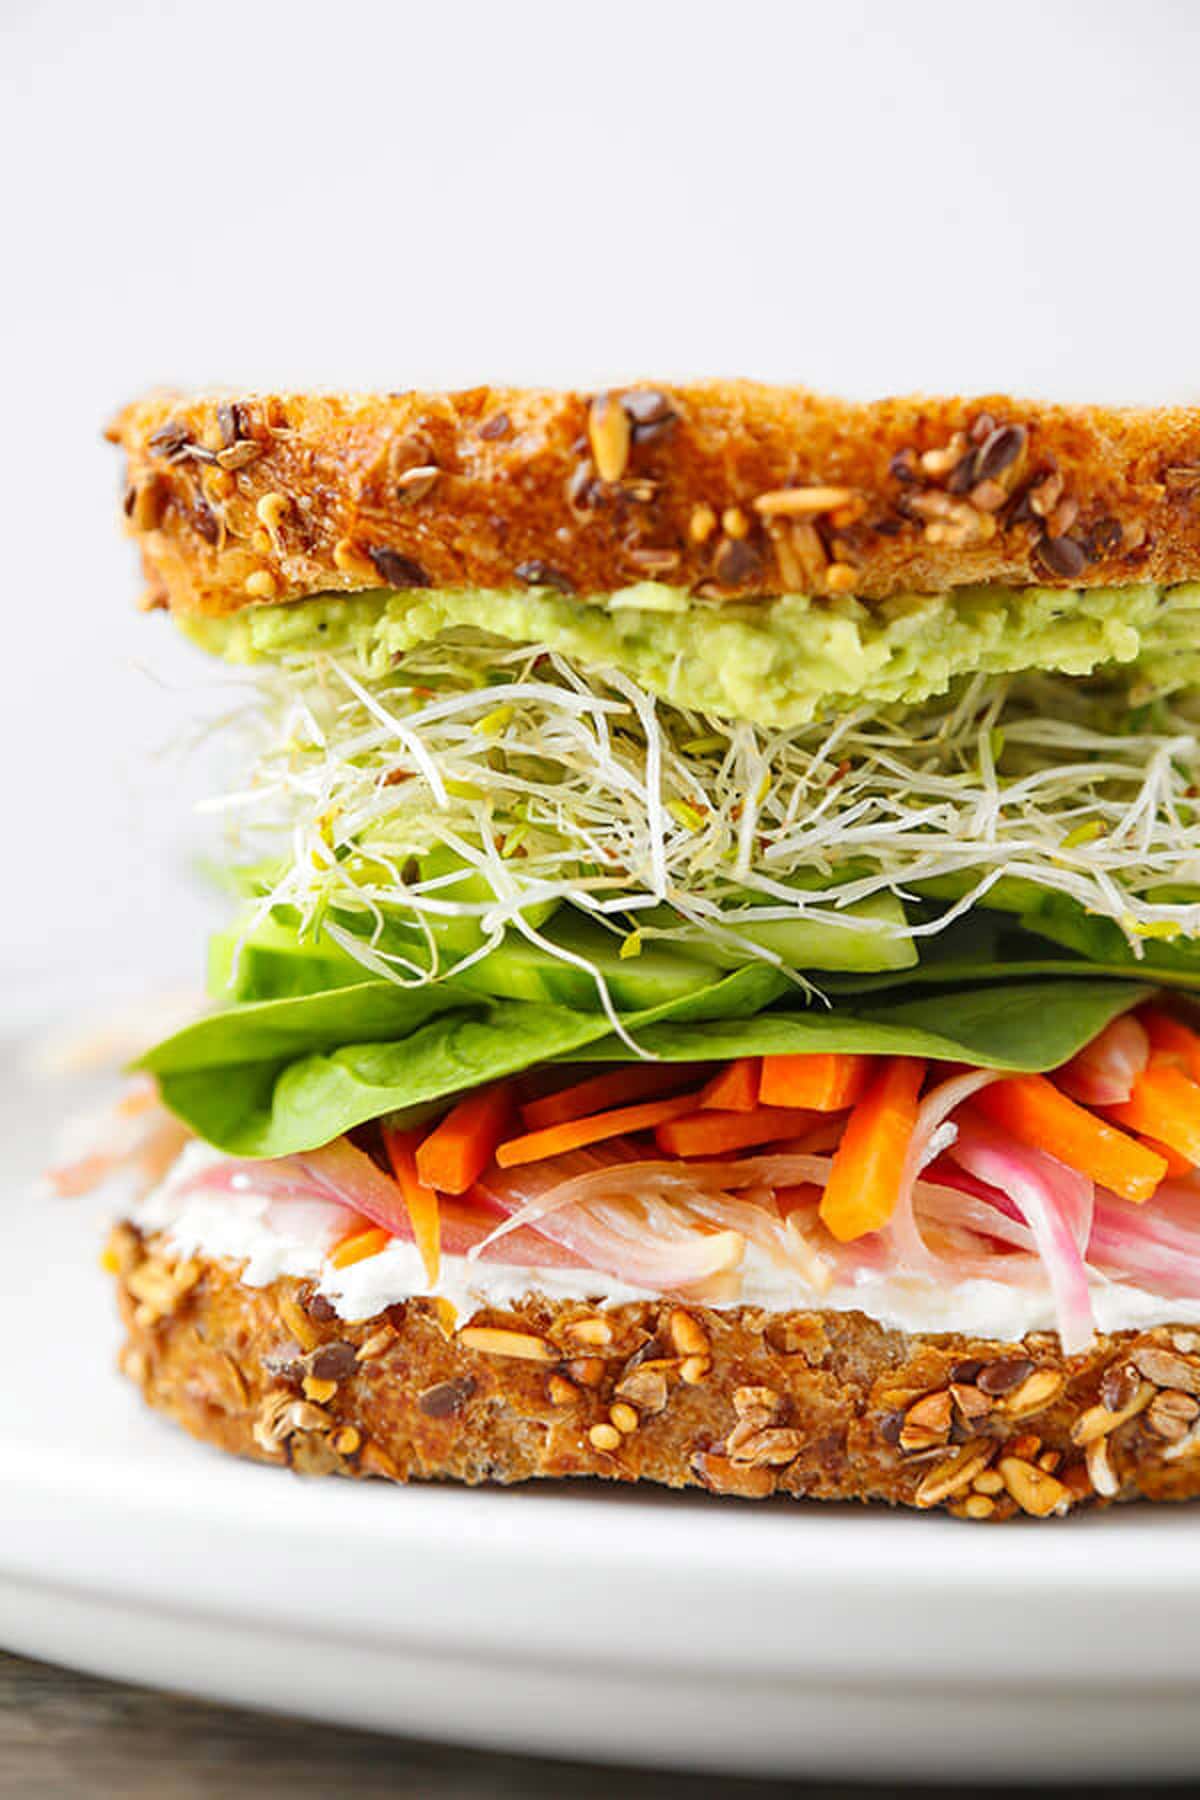 Lunch ideas - California vegetable sandwich